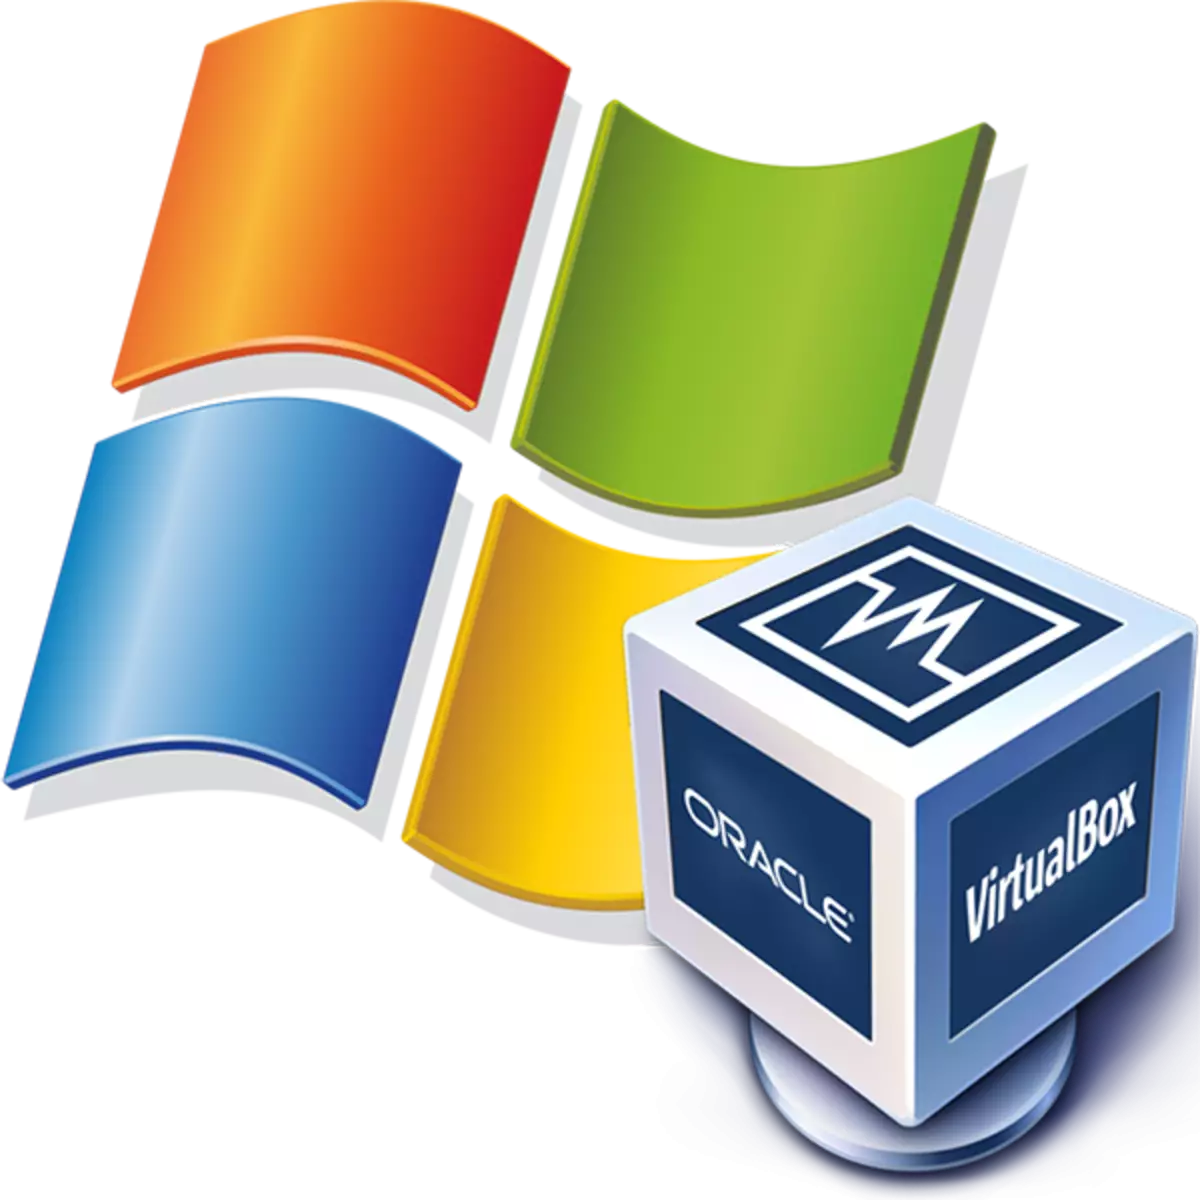 Installing Windows XP on VirtualBox